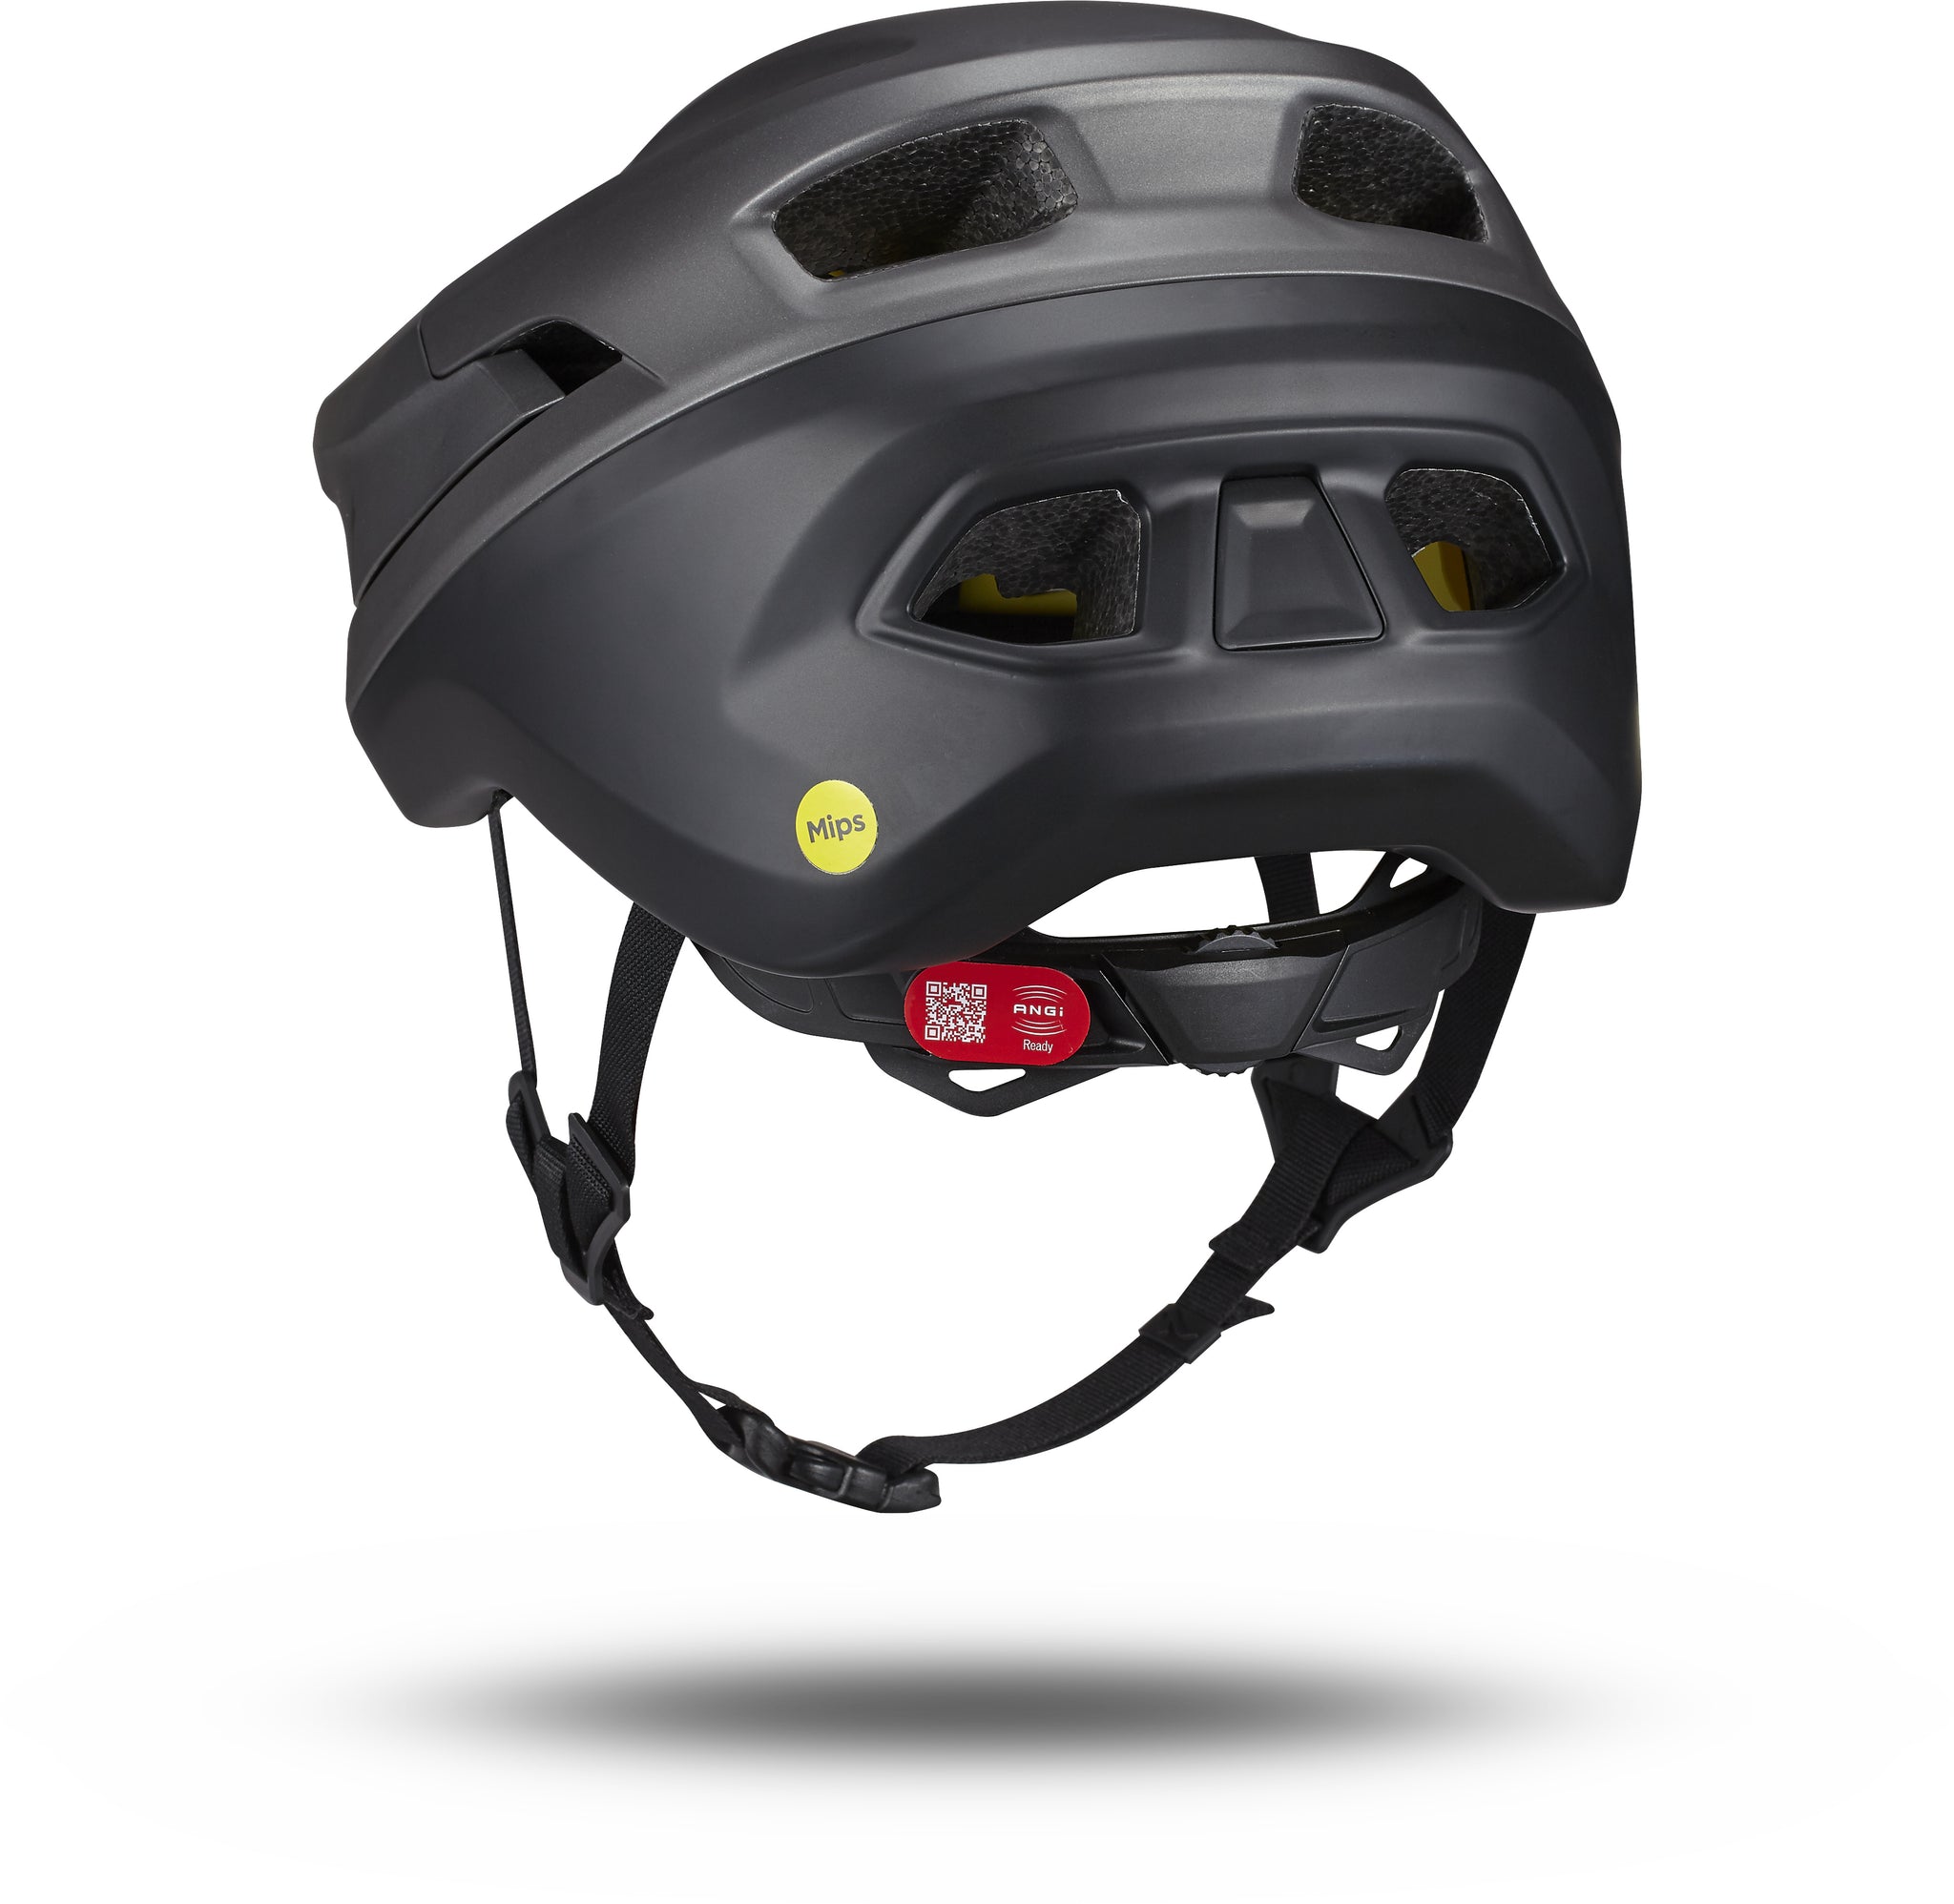 Camber Bike Helmet in black - smoke color- back view